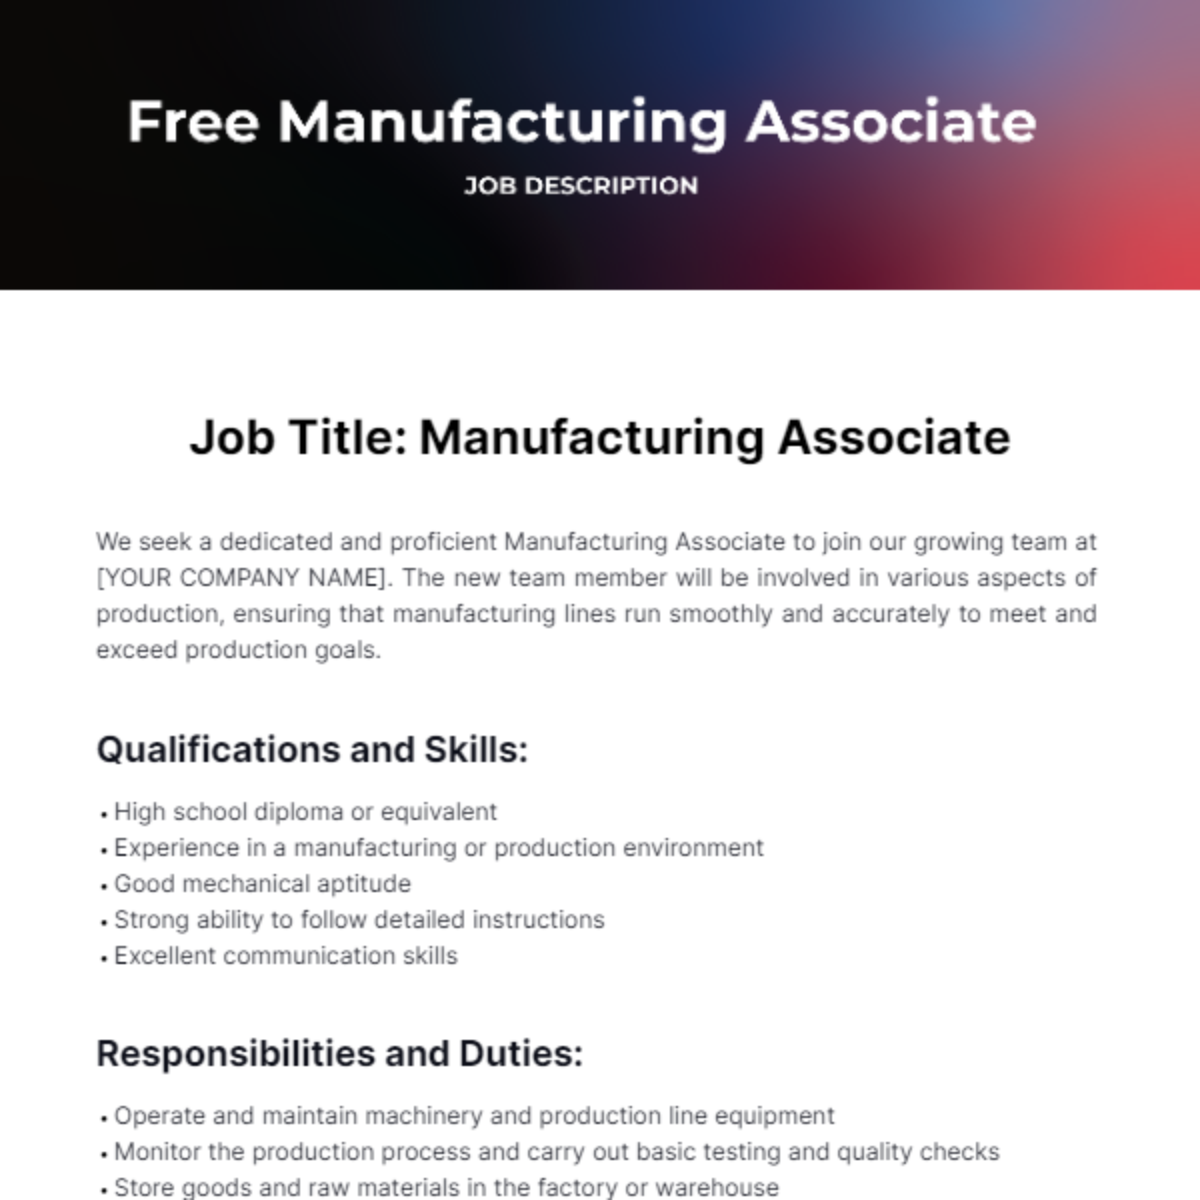 Free Manufacturing Associate Job Description Template